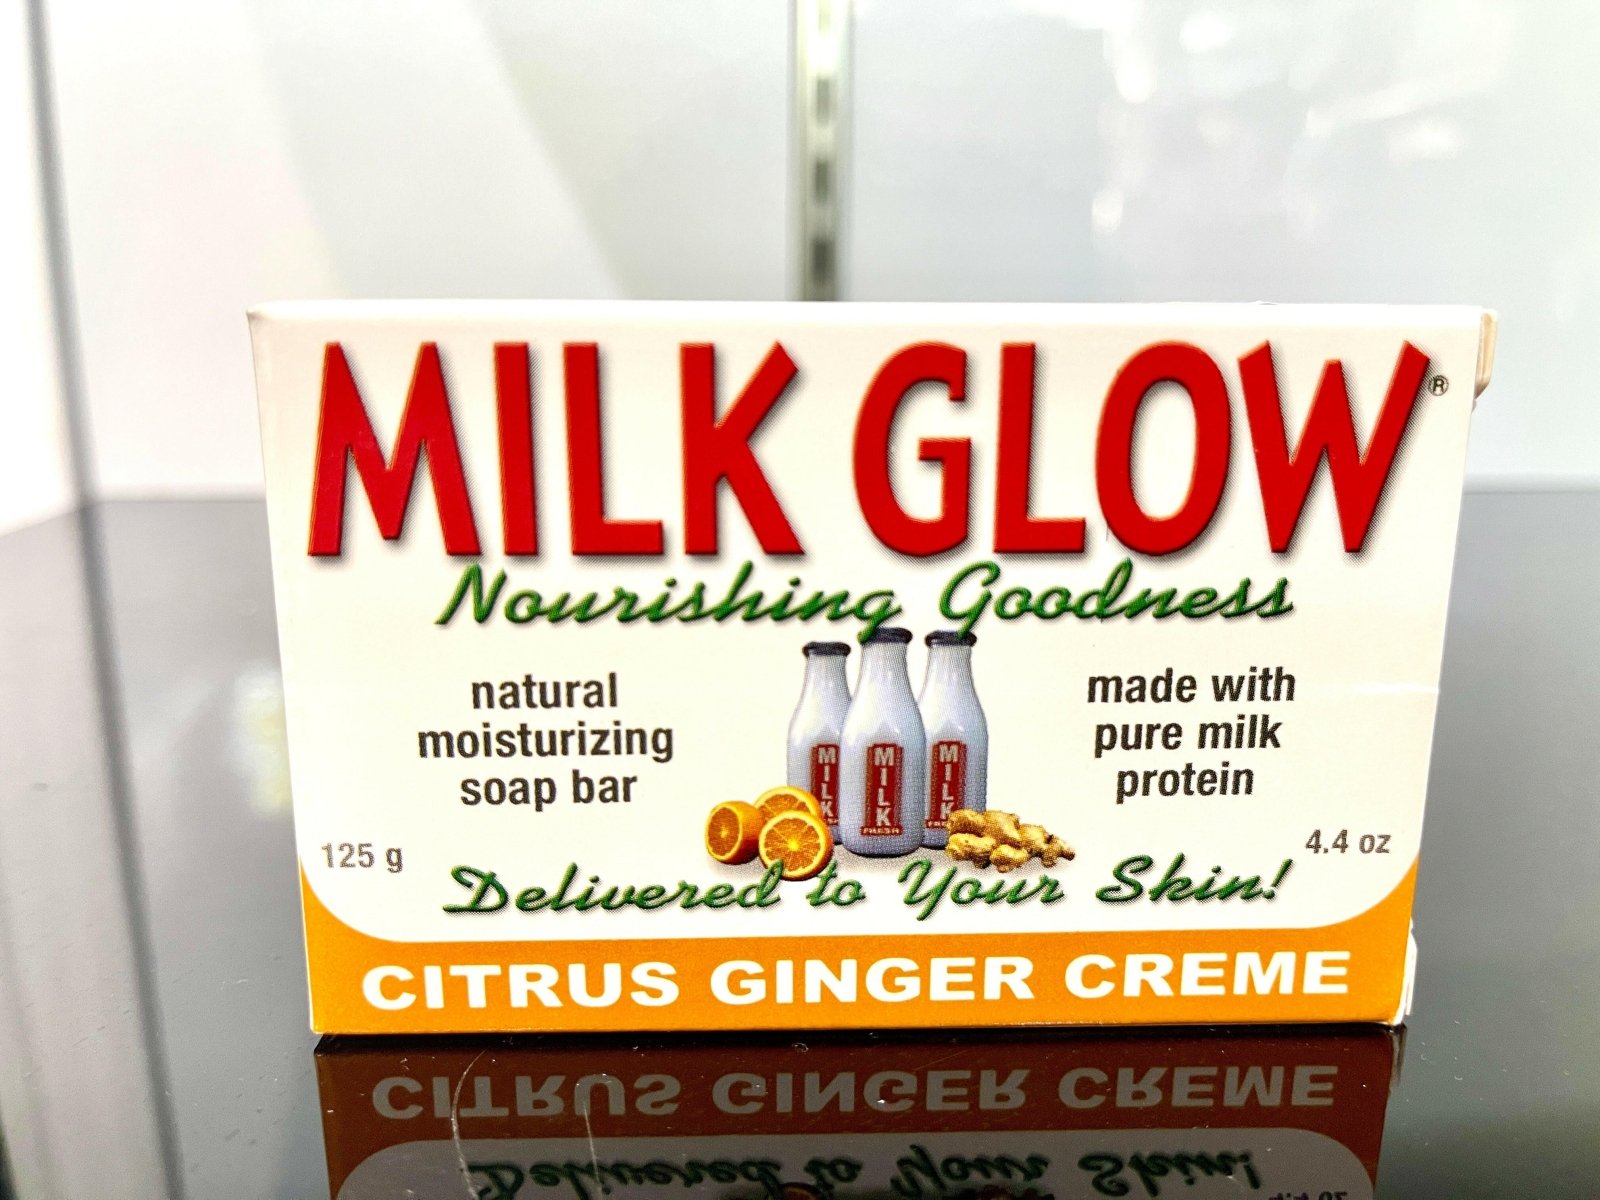 Milk Glow soap bar (125g)